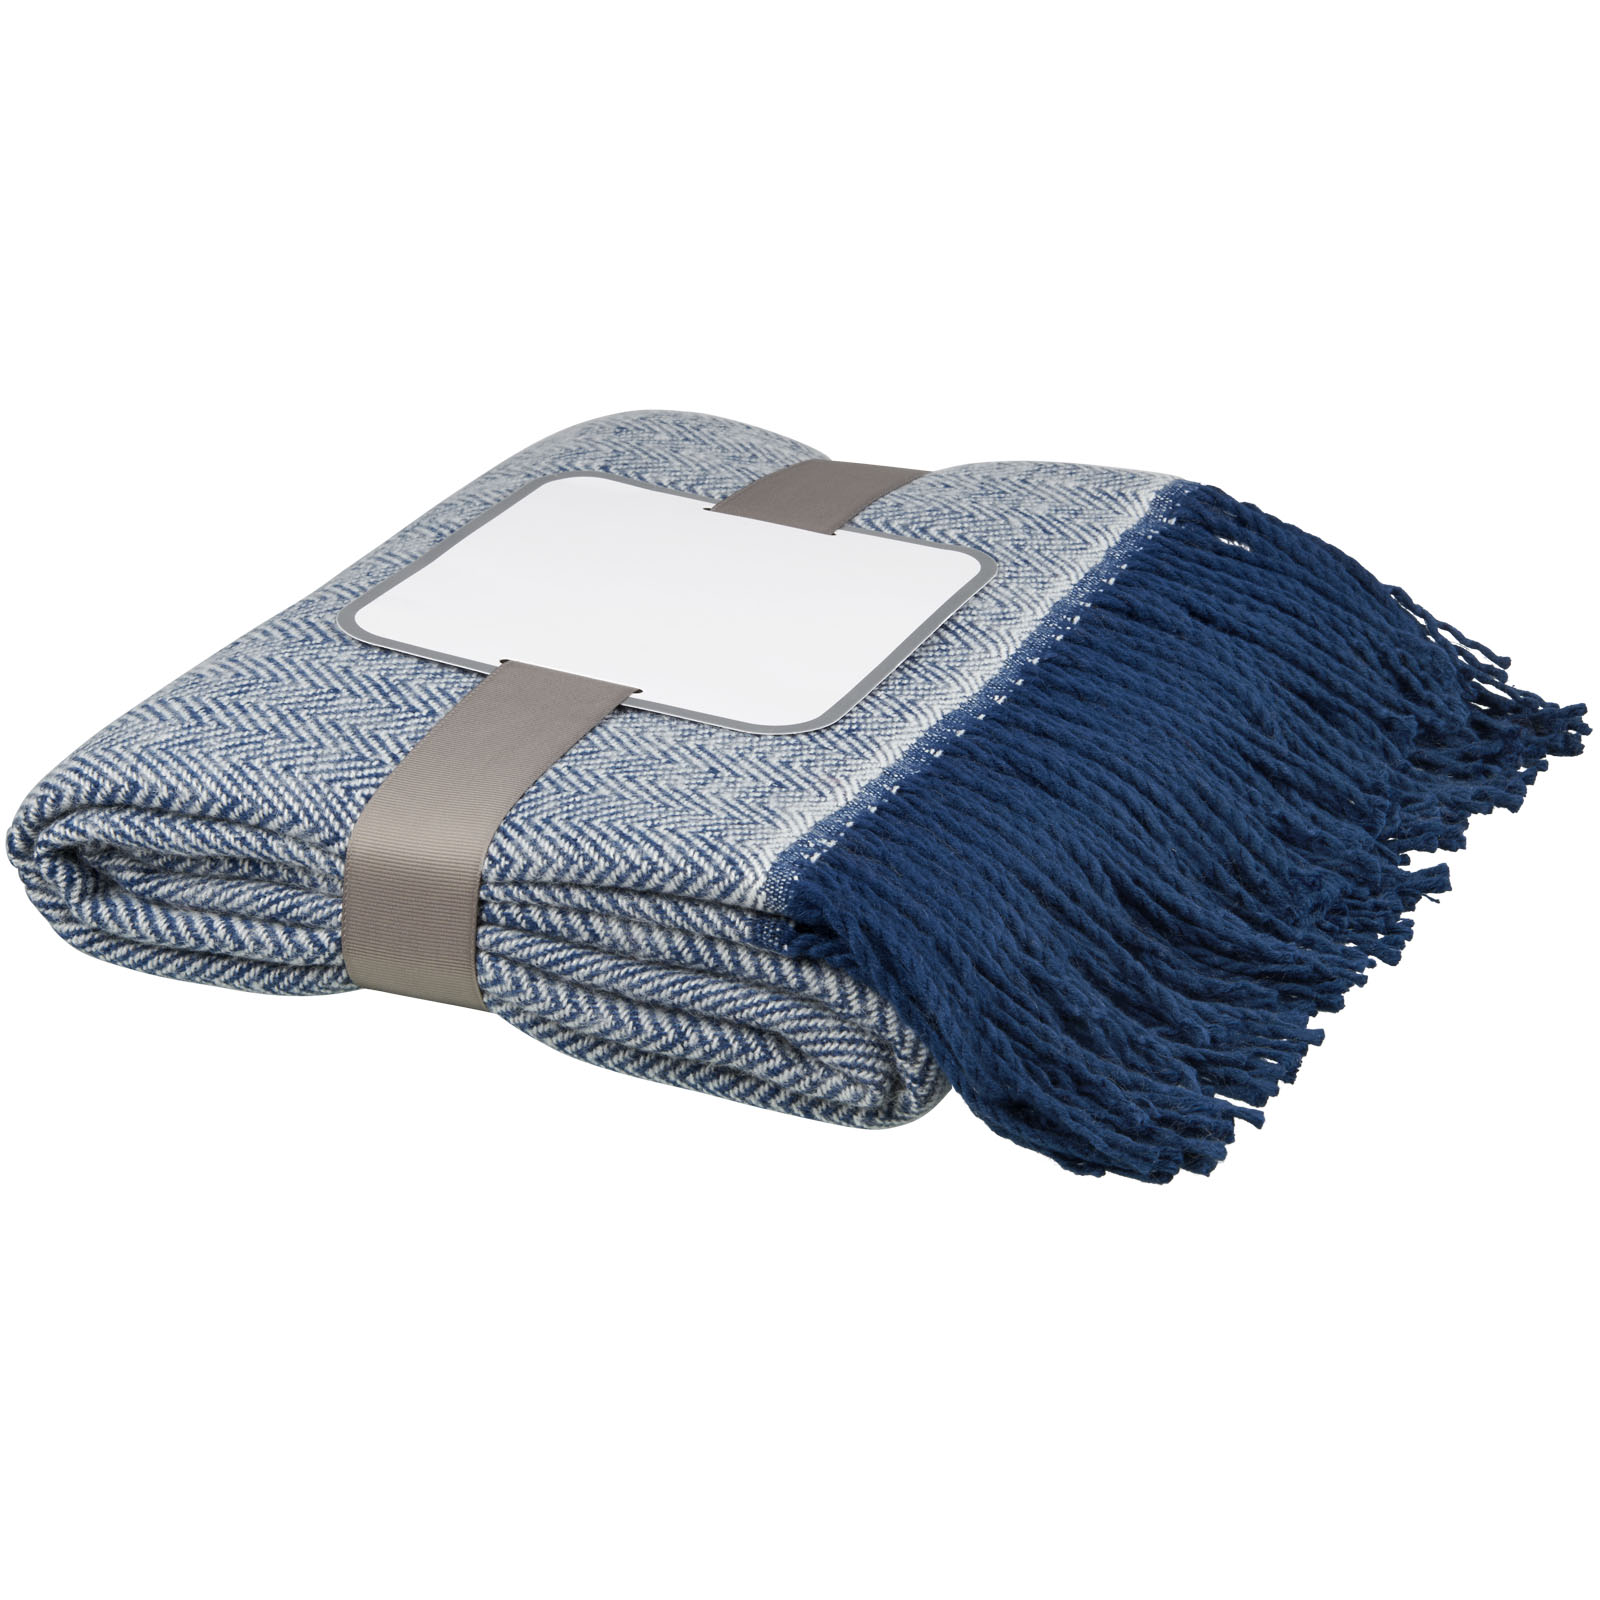 Blankets - Haven herringbone throw blanket